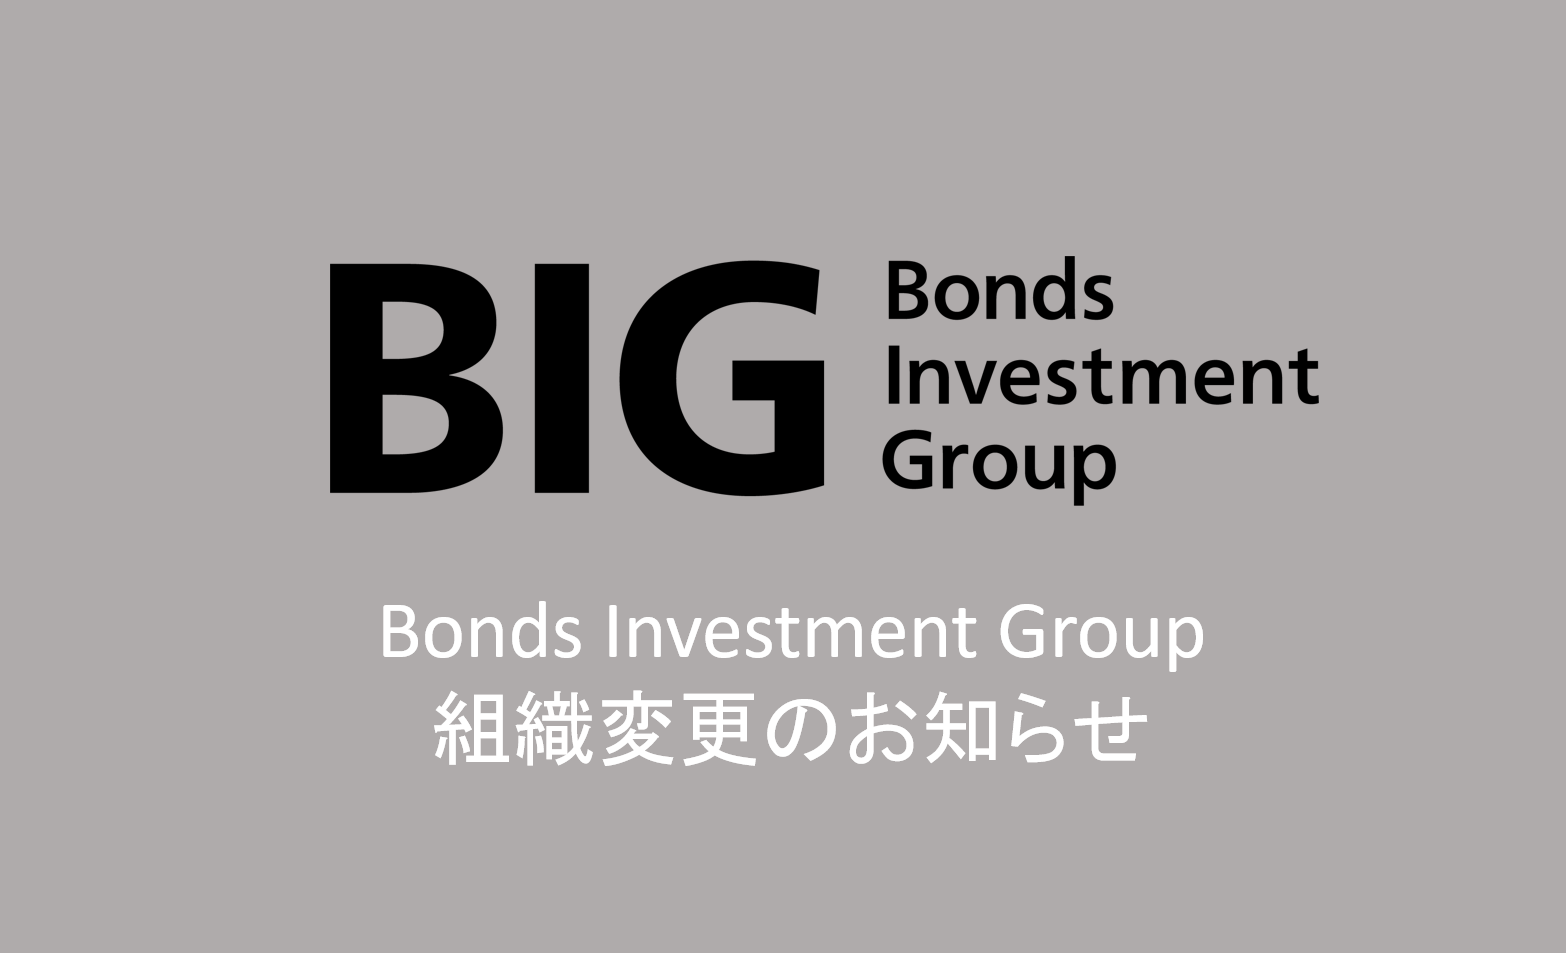 Bonds Investment Group 組織変更のお知らせ Bonds Investment Group株式会社のプレスリリース